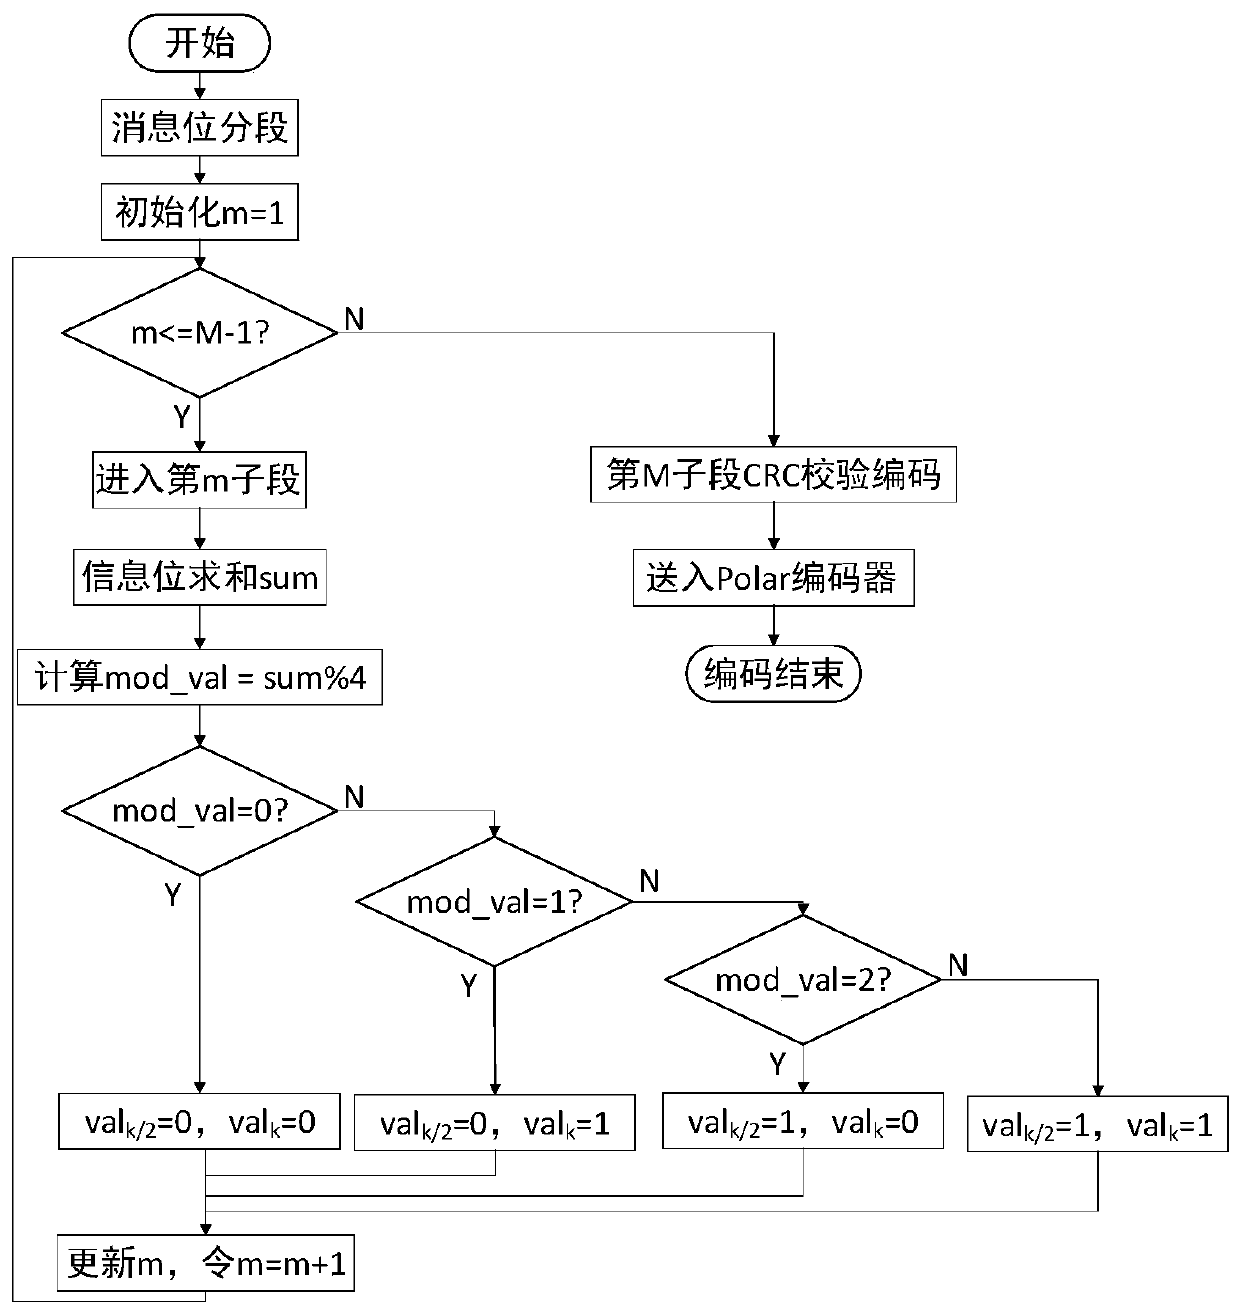 HM4SC-based polar code adaptive SCL coding and decoding method